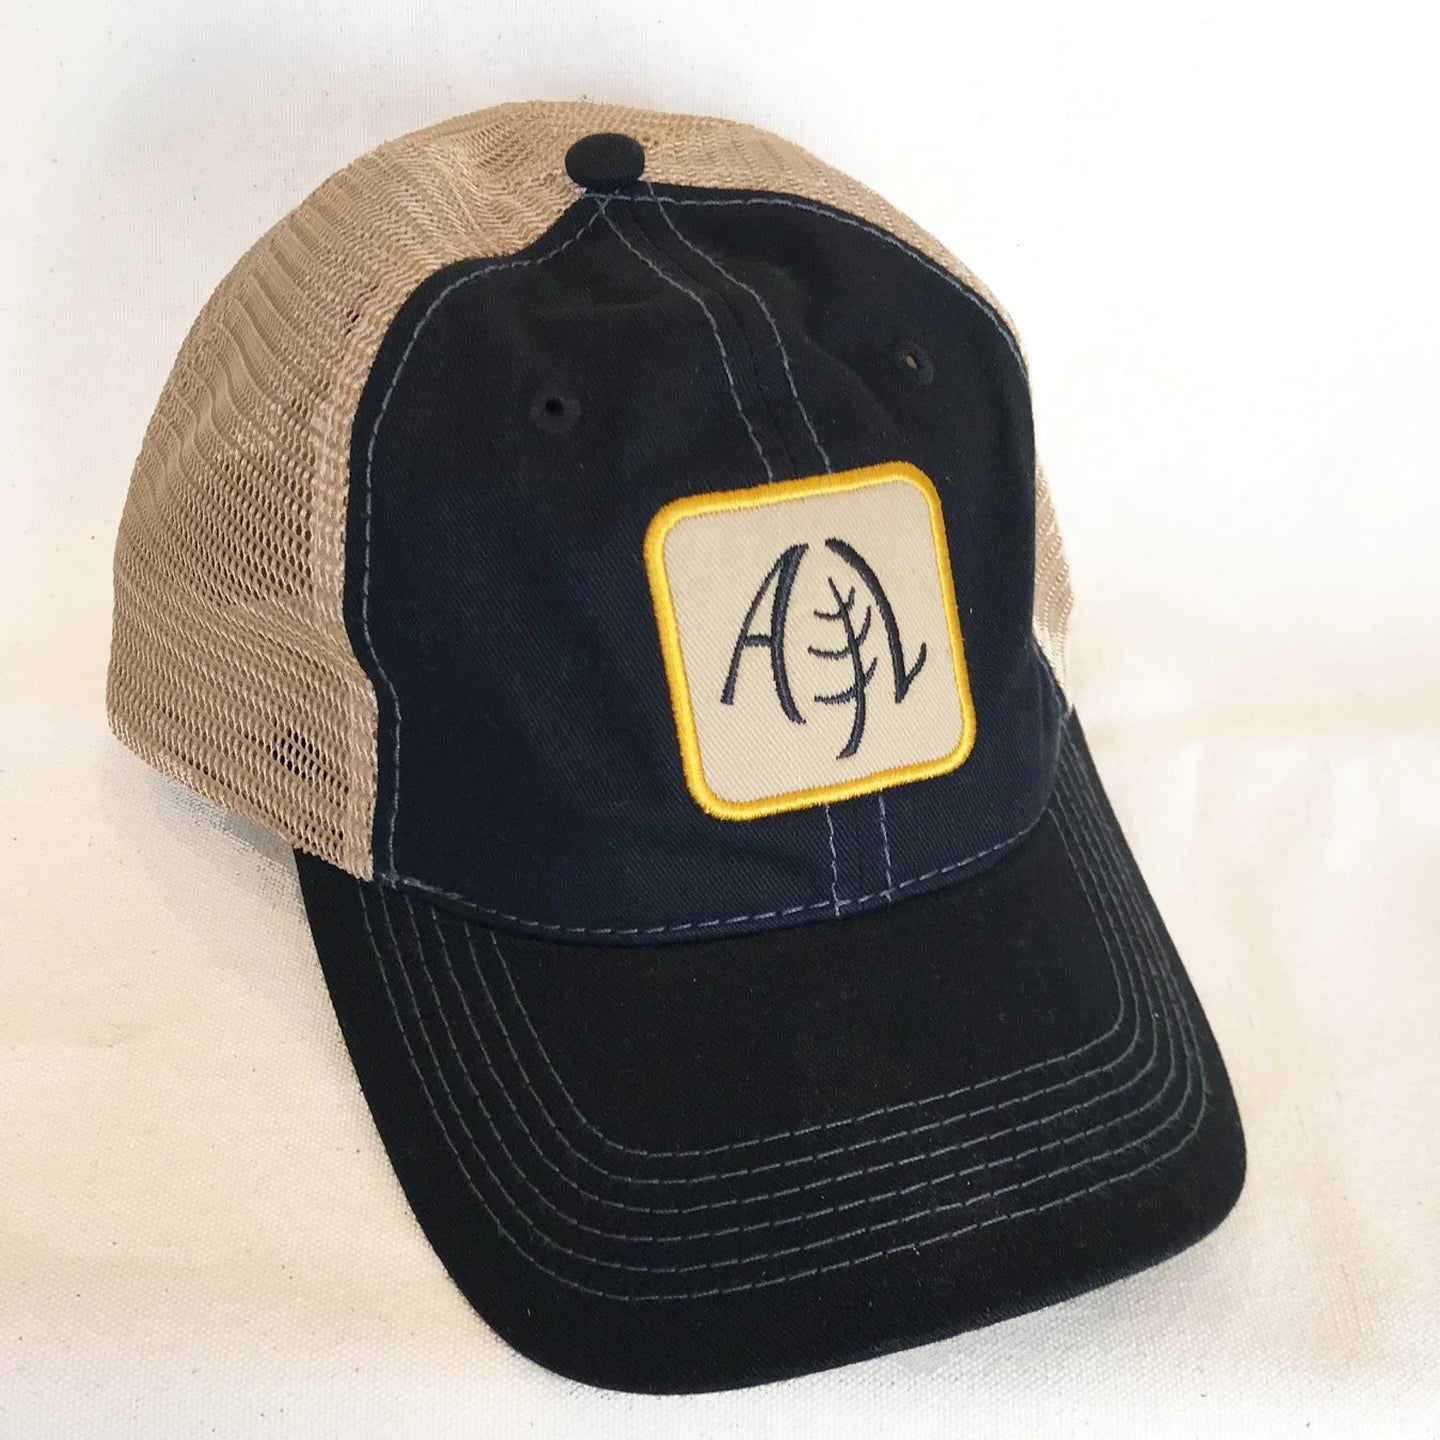 AL Trucker's cap